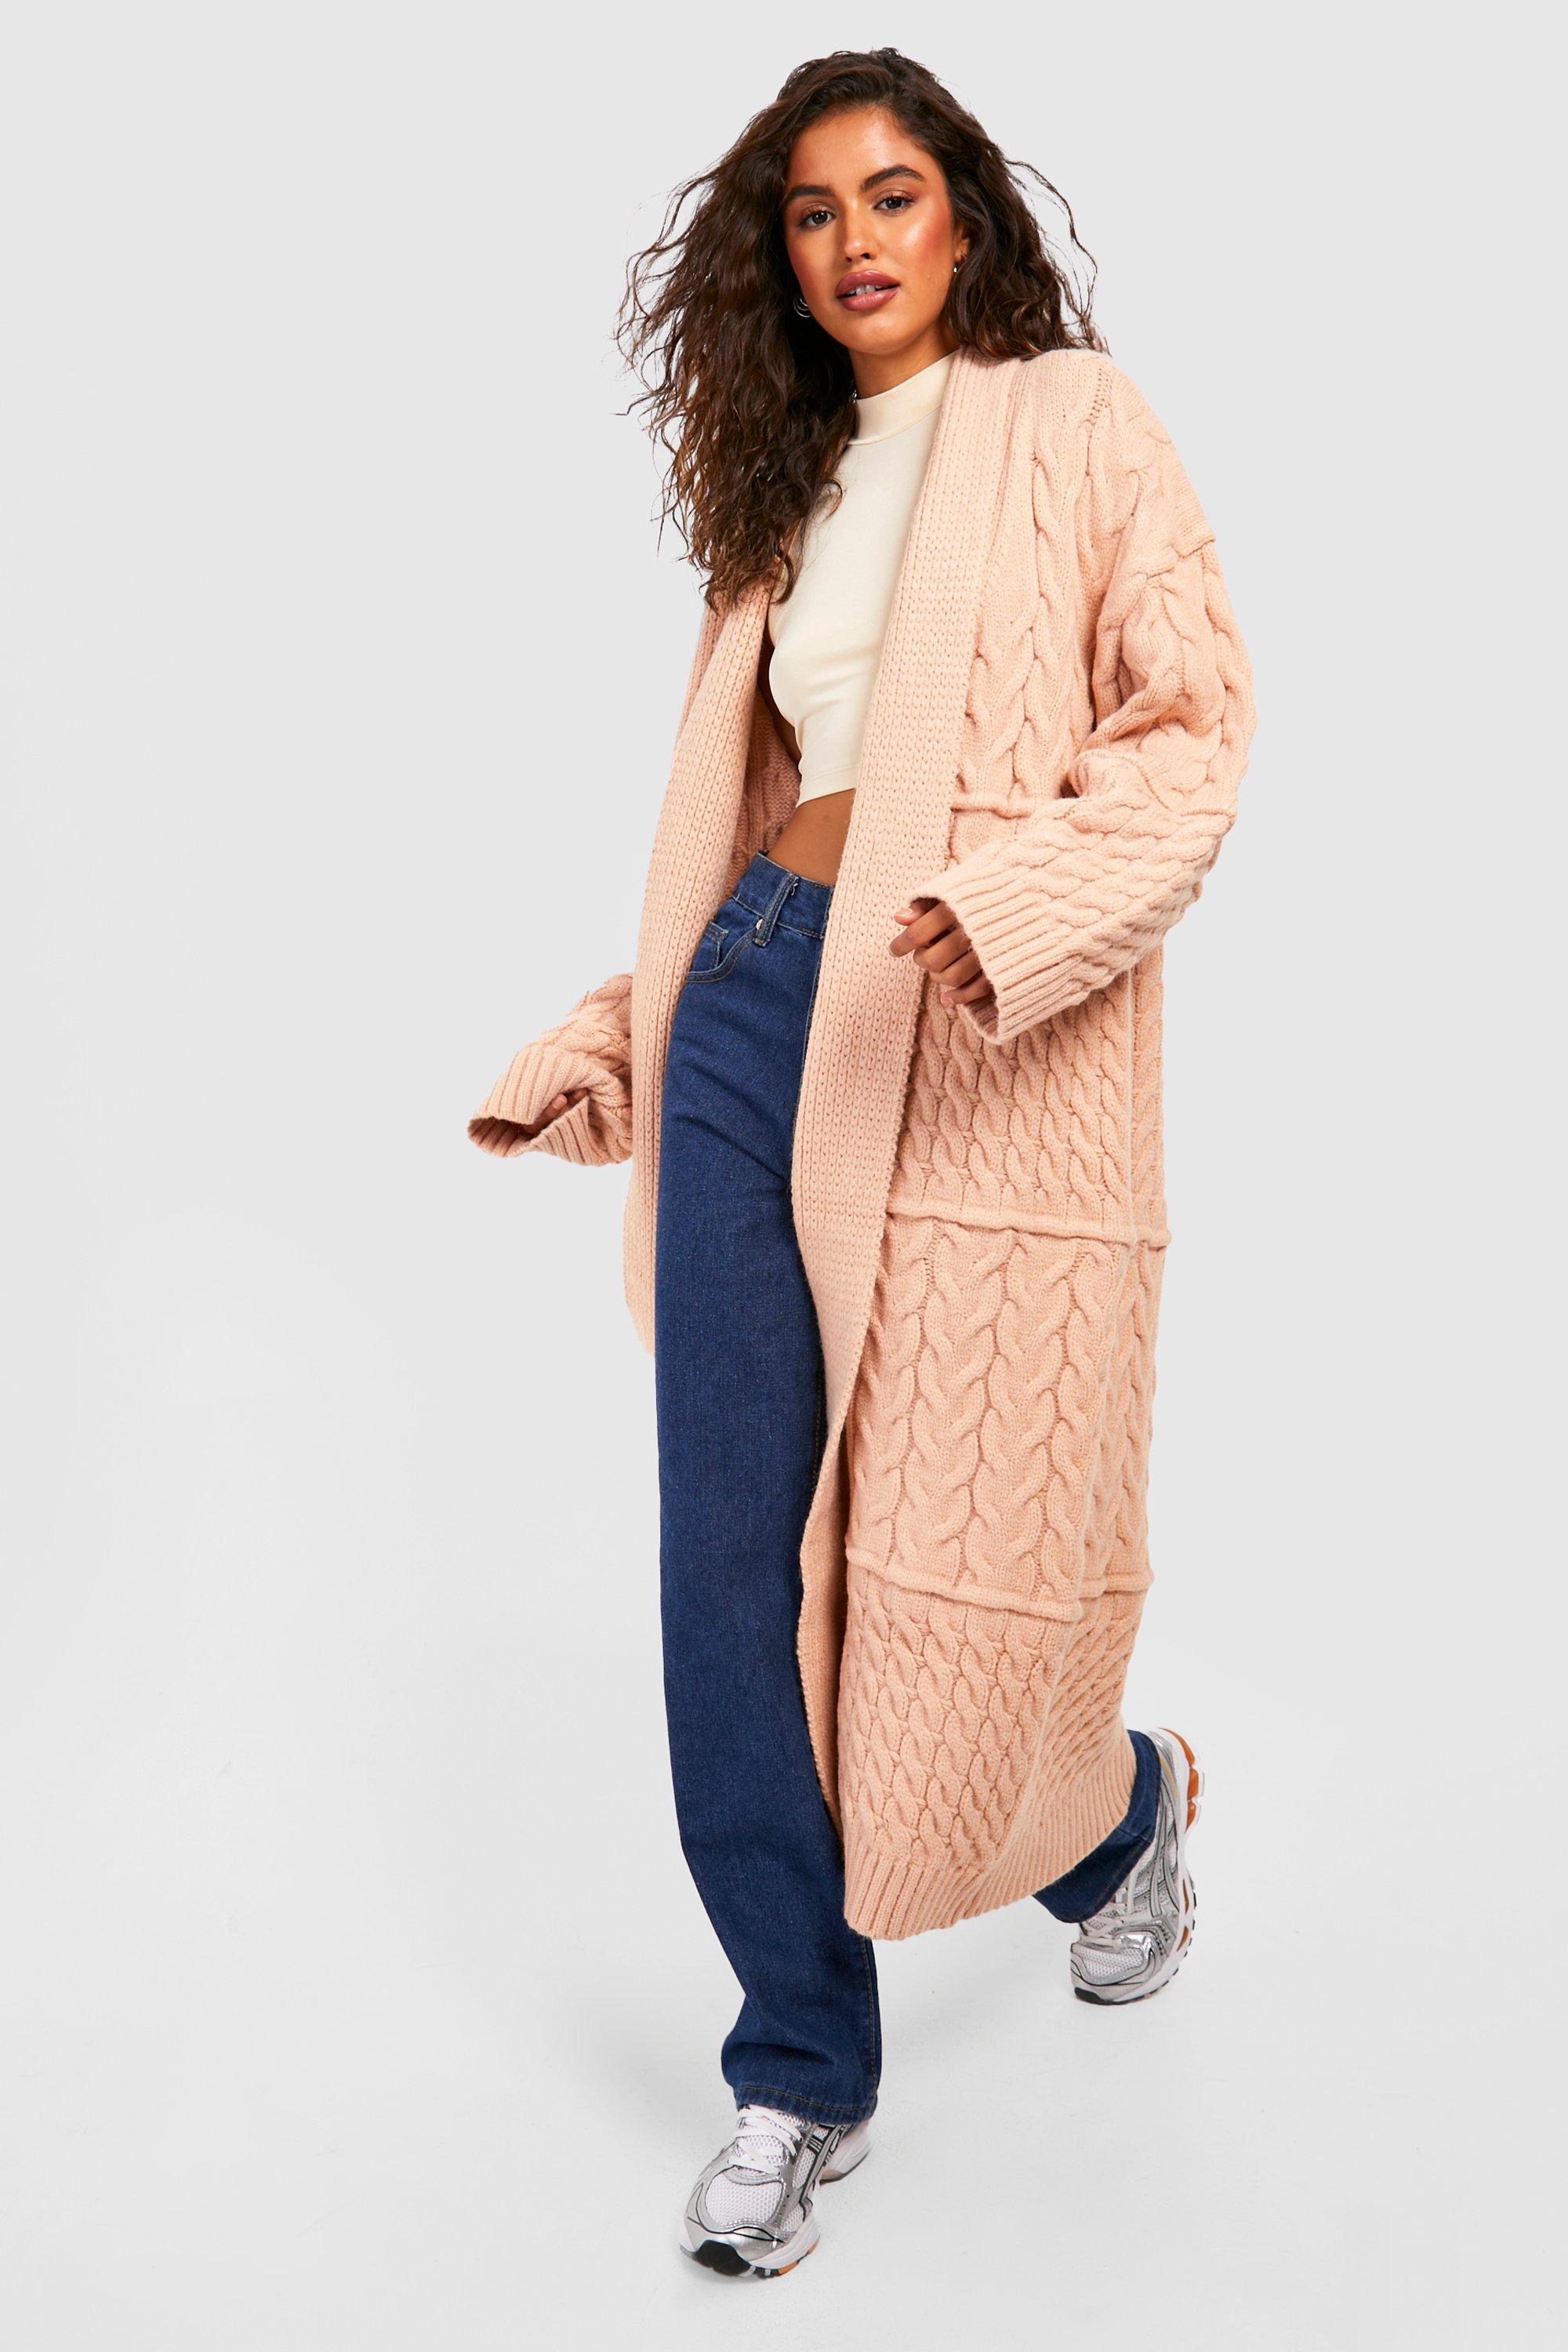 Plus Size Long Cardigan Duster Sweater for Women,heavy Knit, Maxi